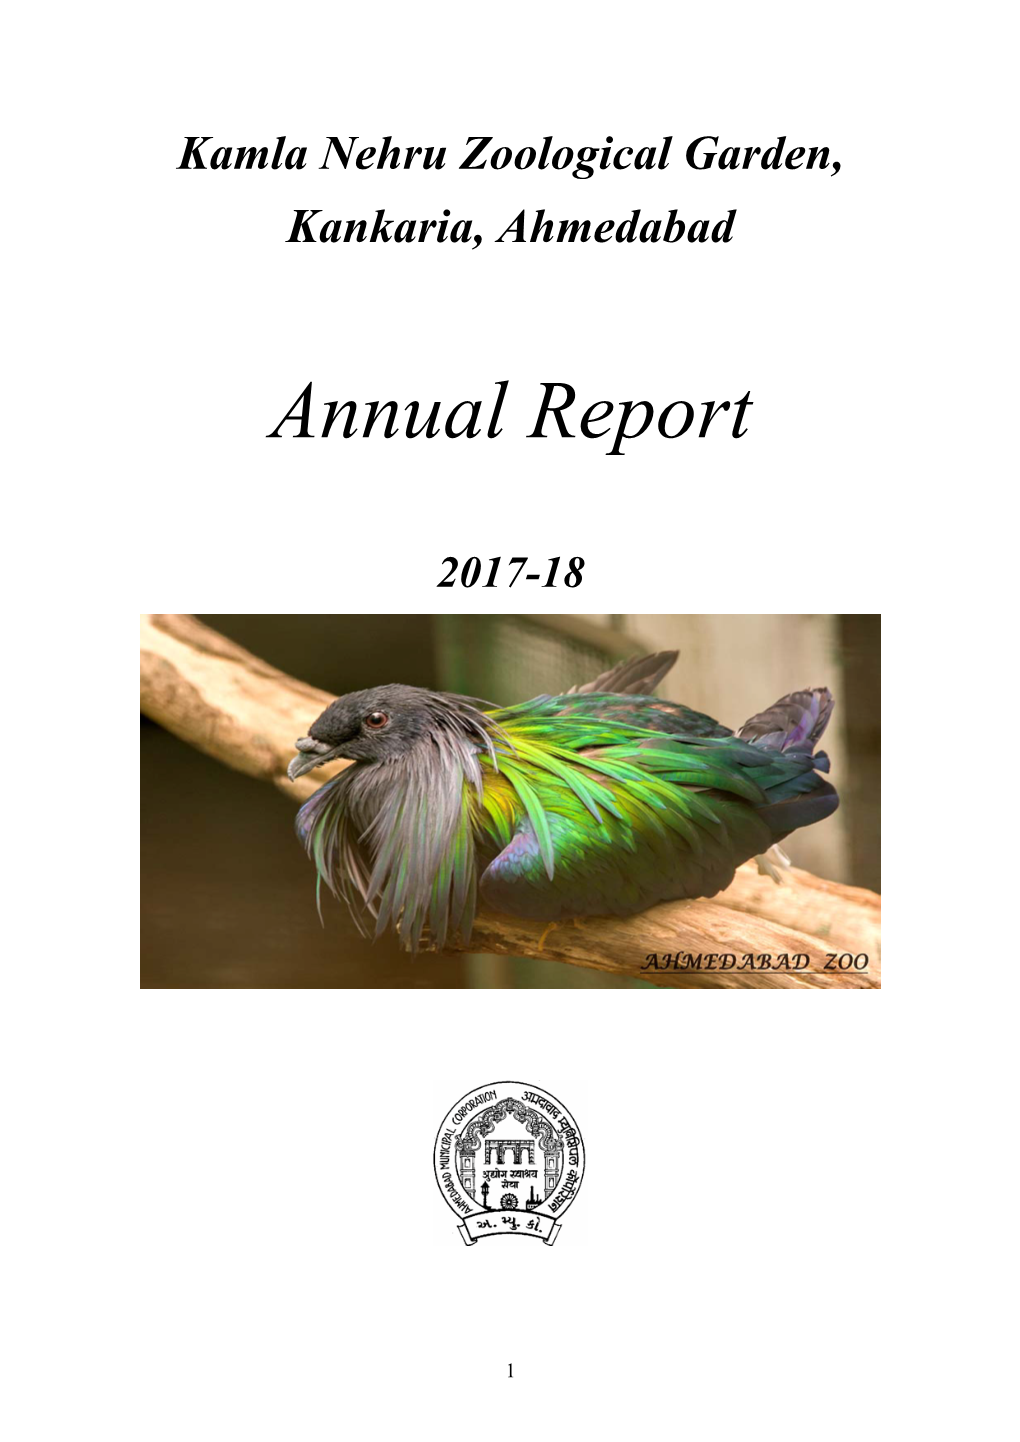 Annual Report Ahmedabad Zoo 201718.Pdf